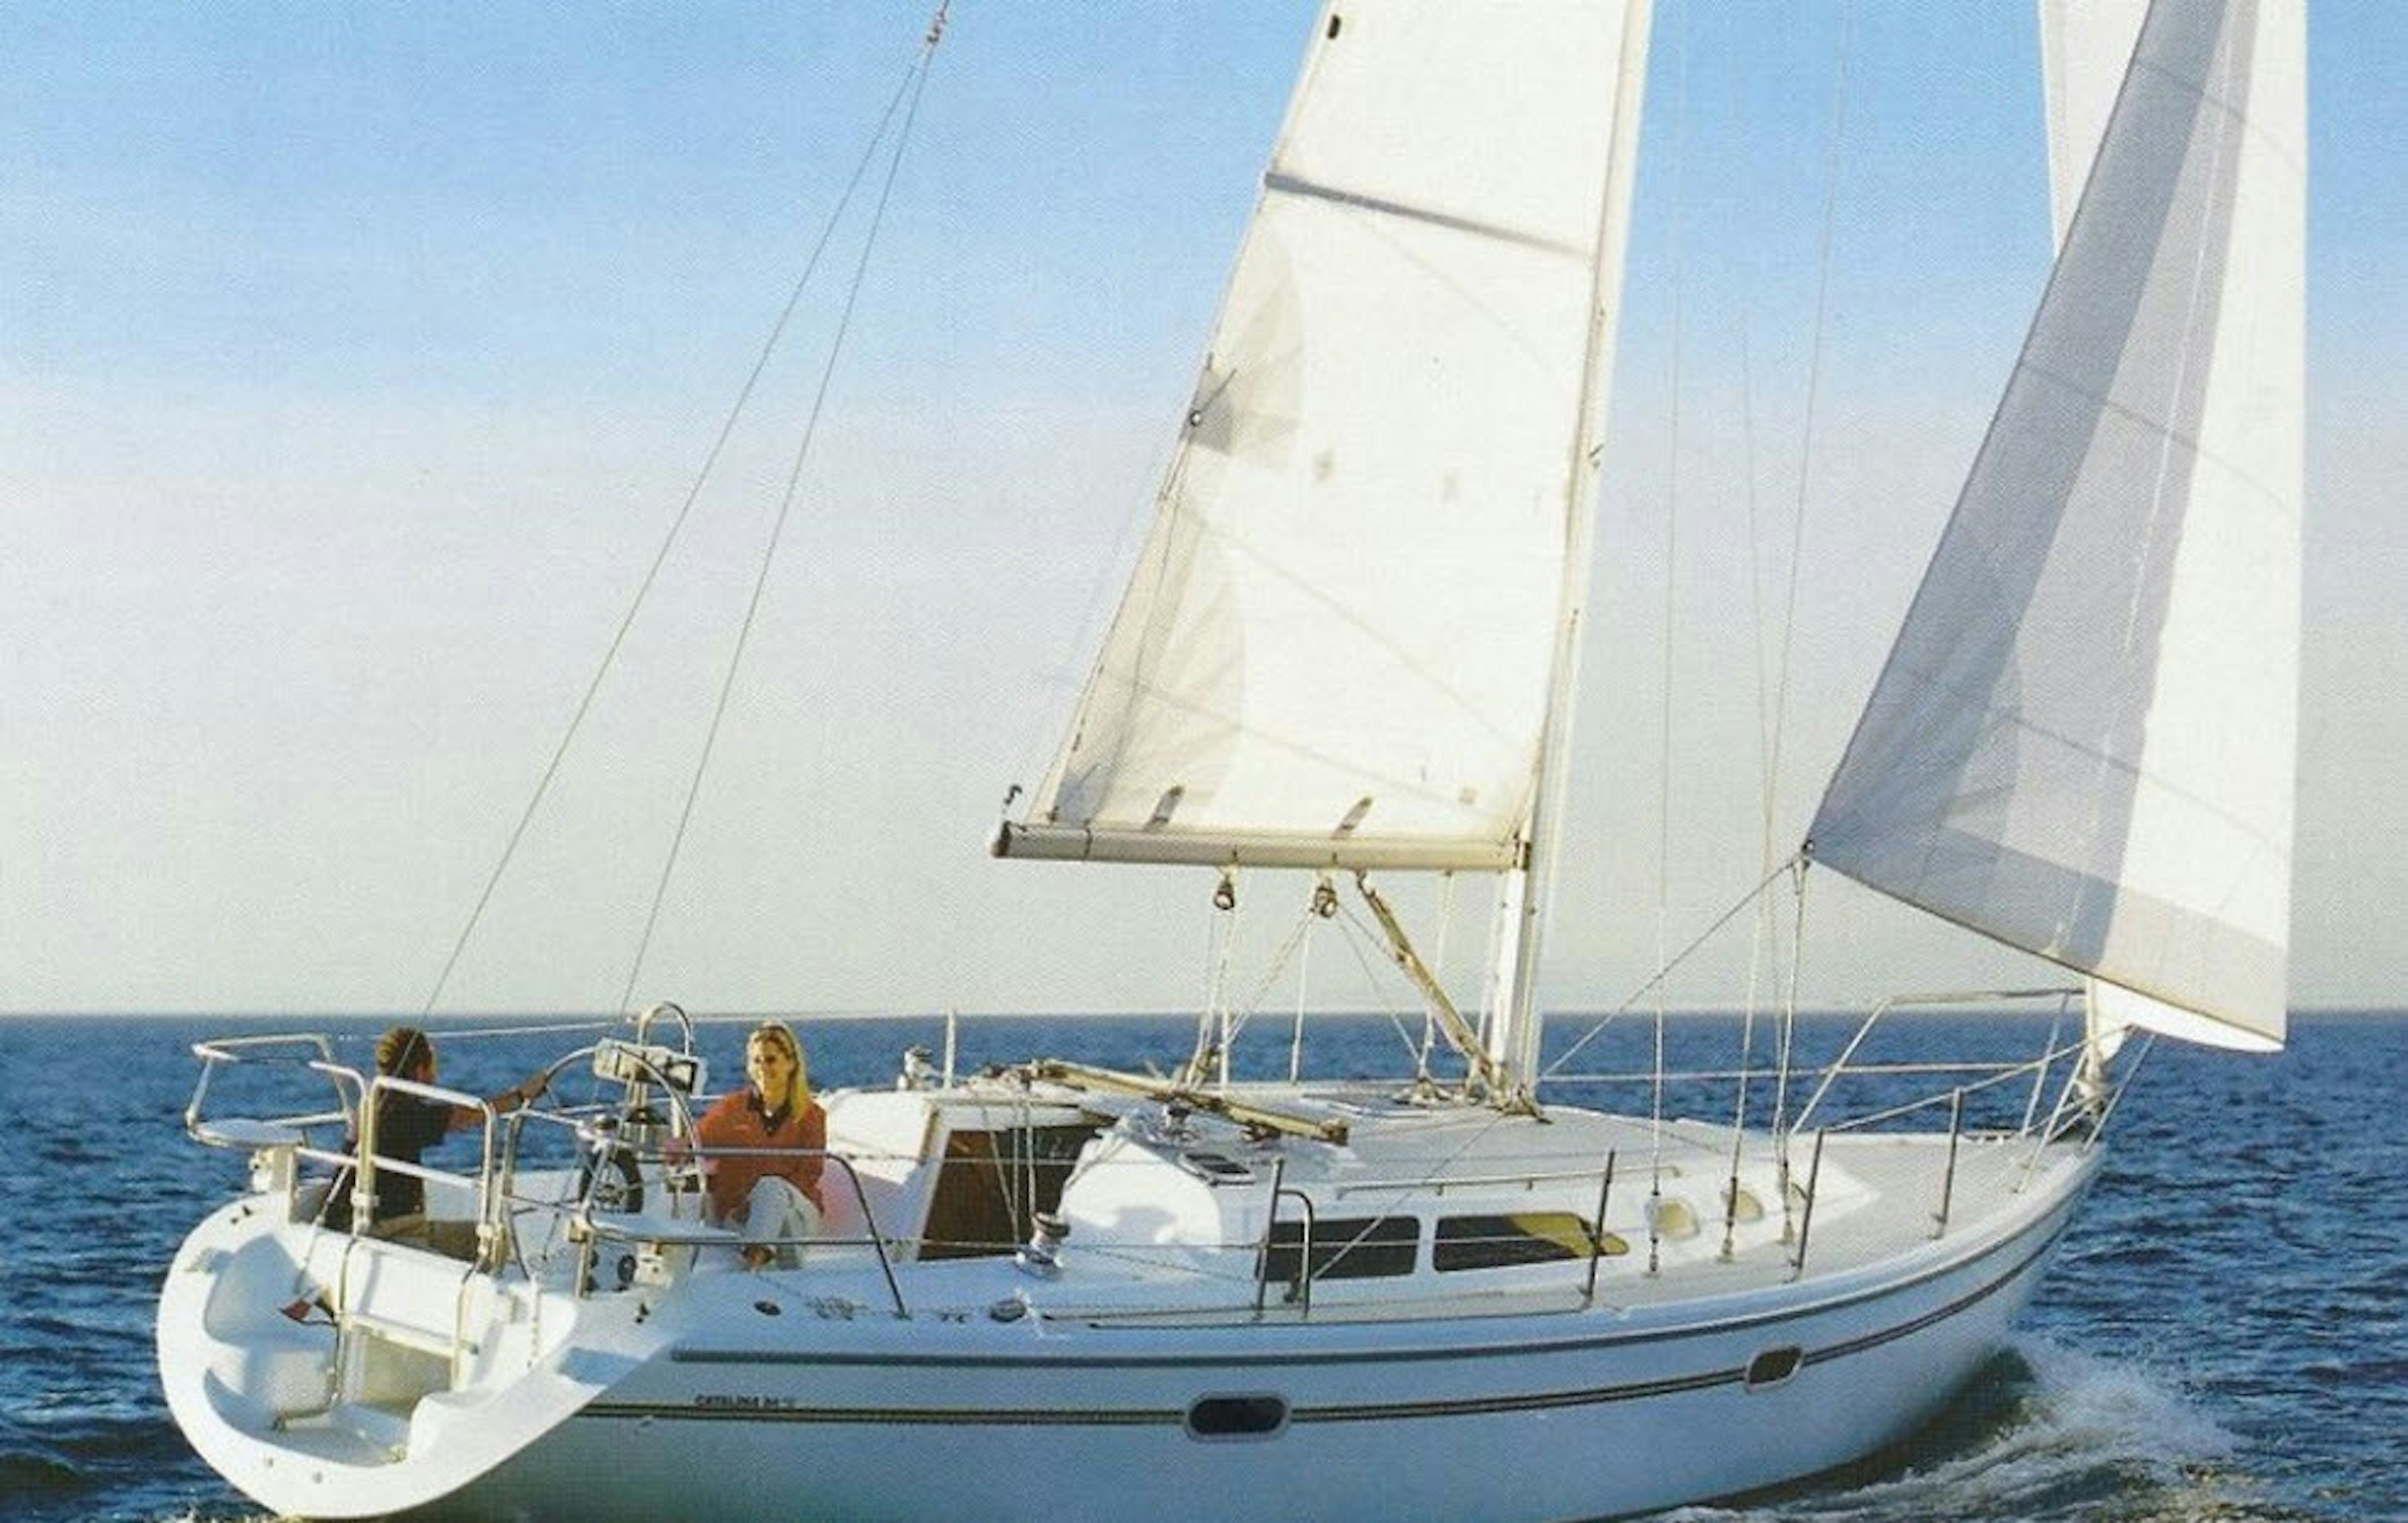 1995 Catalina Yachts Catalina 22 MkII - Fin Keel